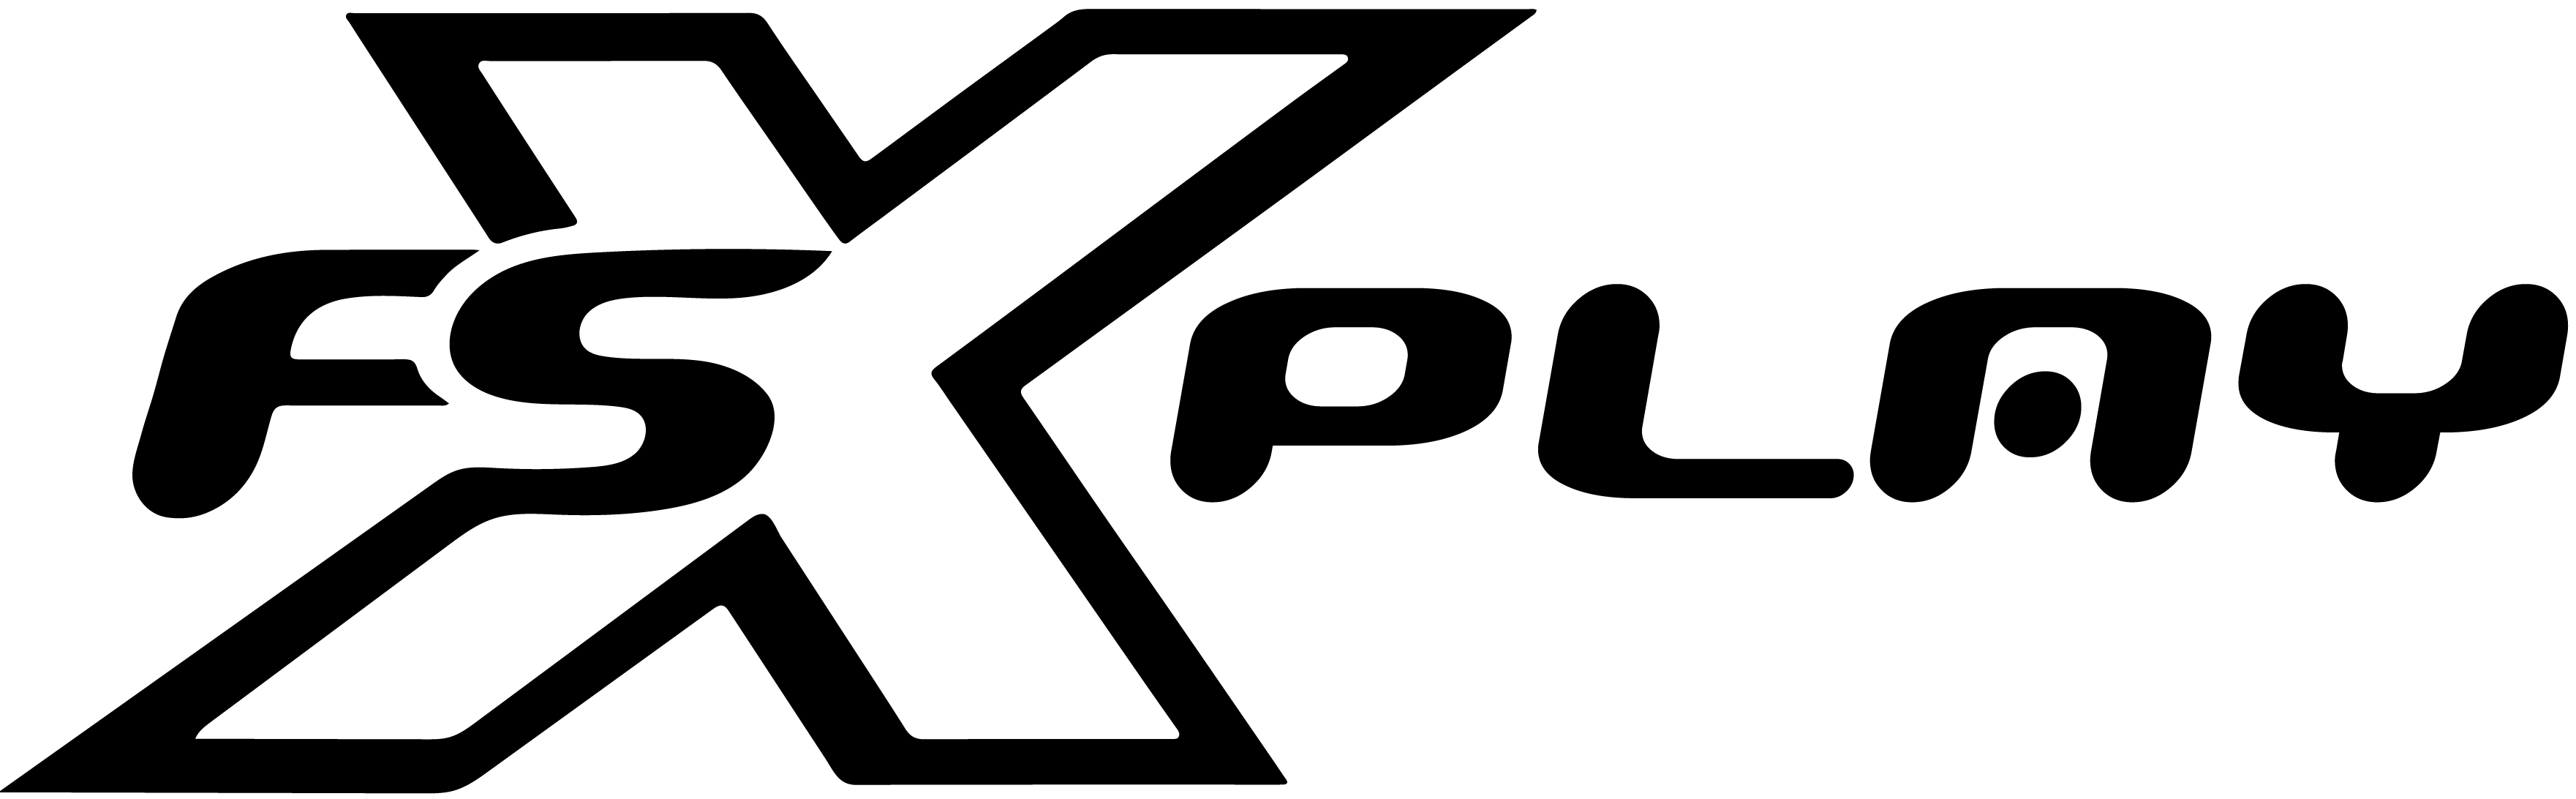 FSXPlay Logo black